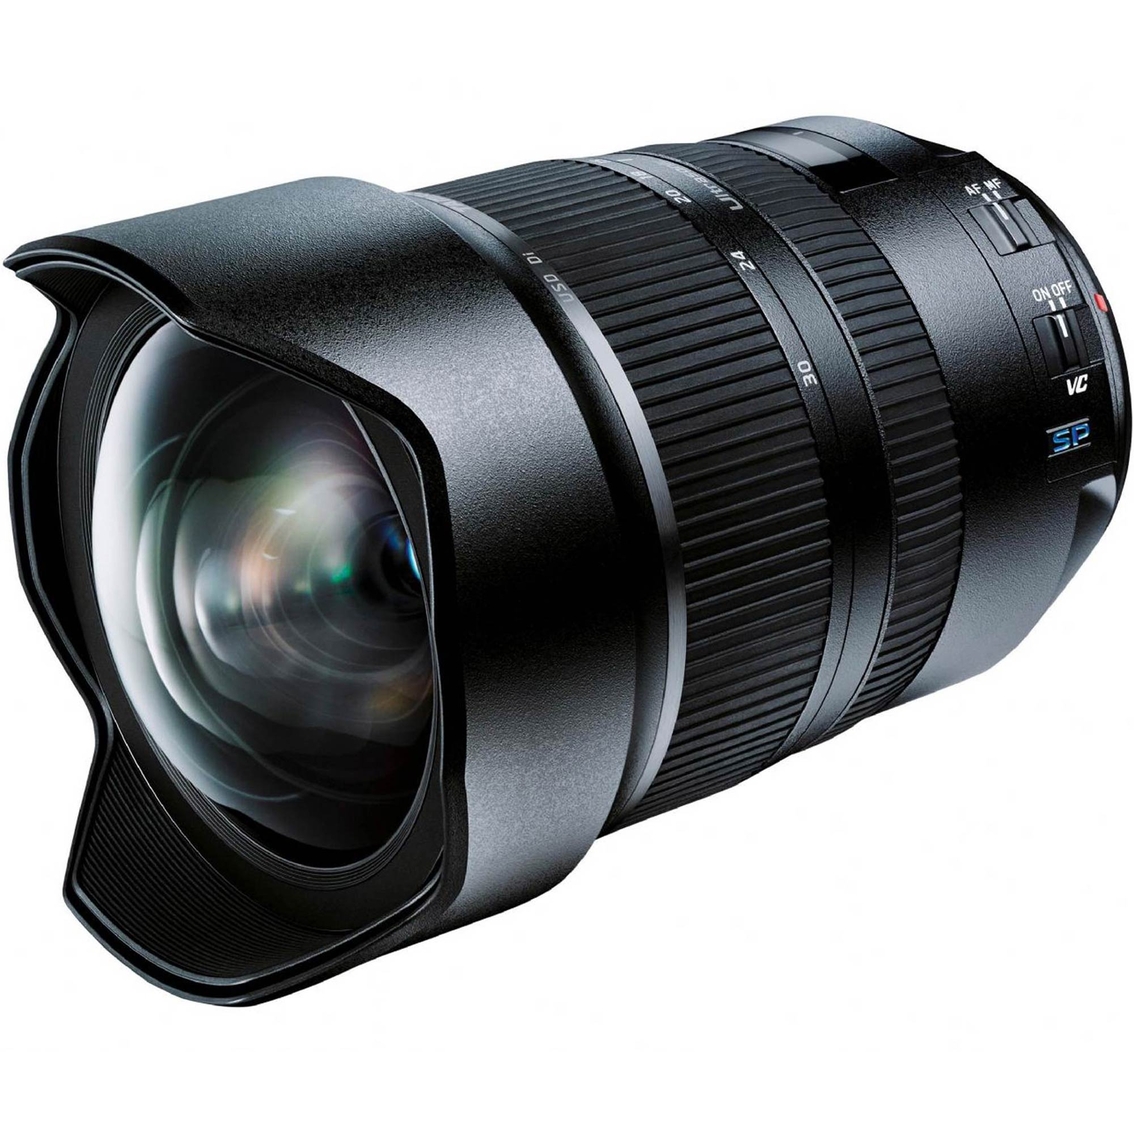 Tamron Sp 15-30 F2.8 Di Vc Usd Canon Camera Lens | Lenses